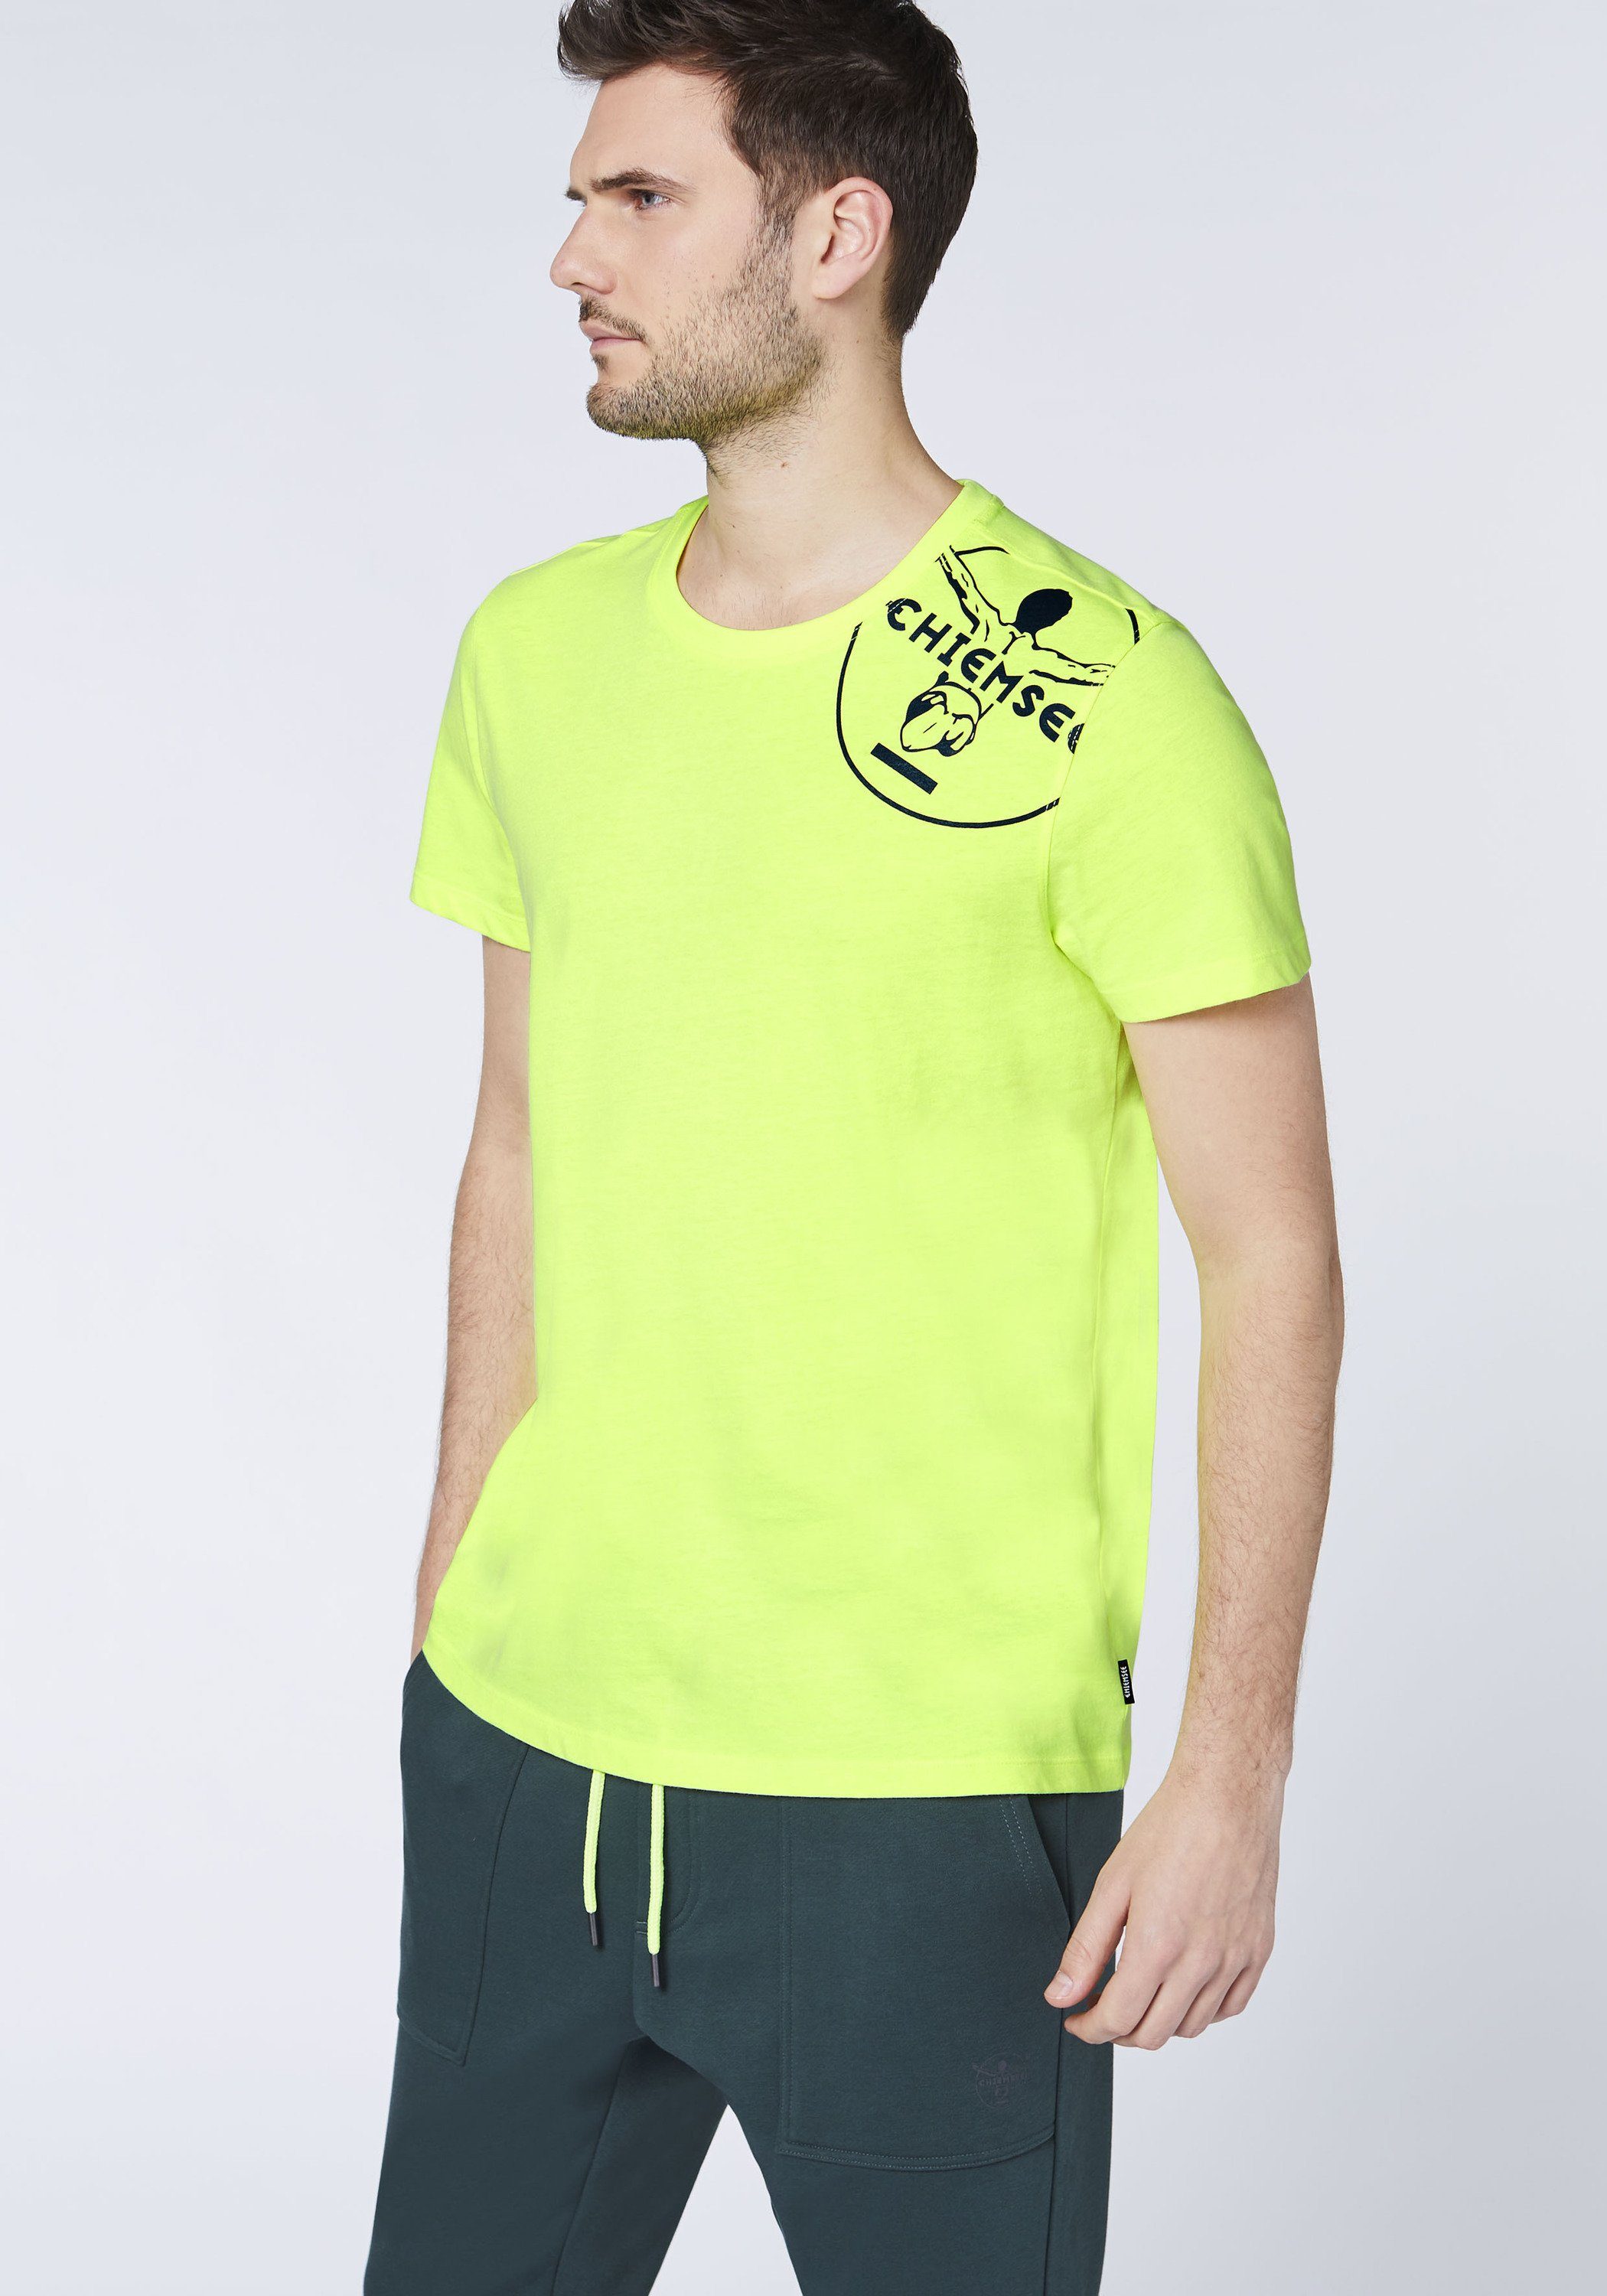 Chiemsee Print-Shirt T-Shirt mit Jumper-Motiv 1 Safety Yellow